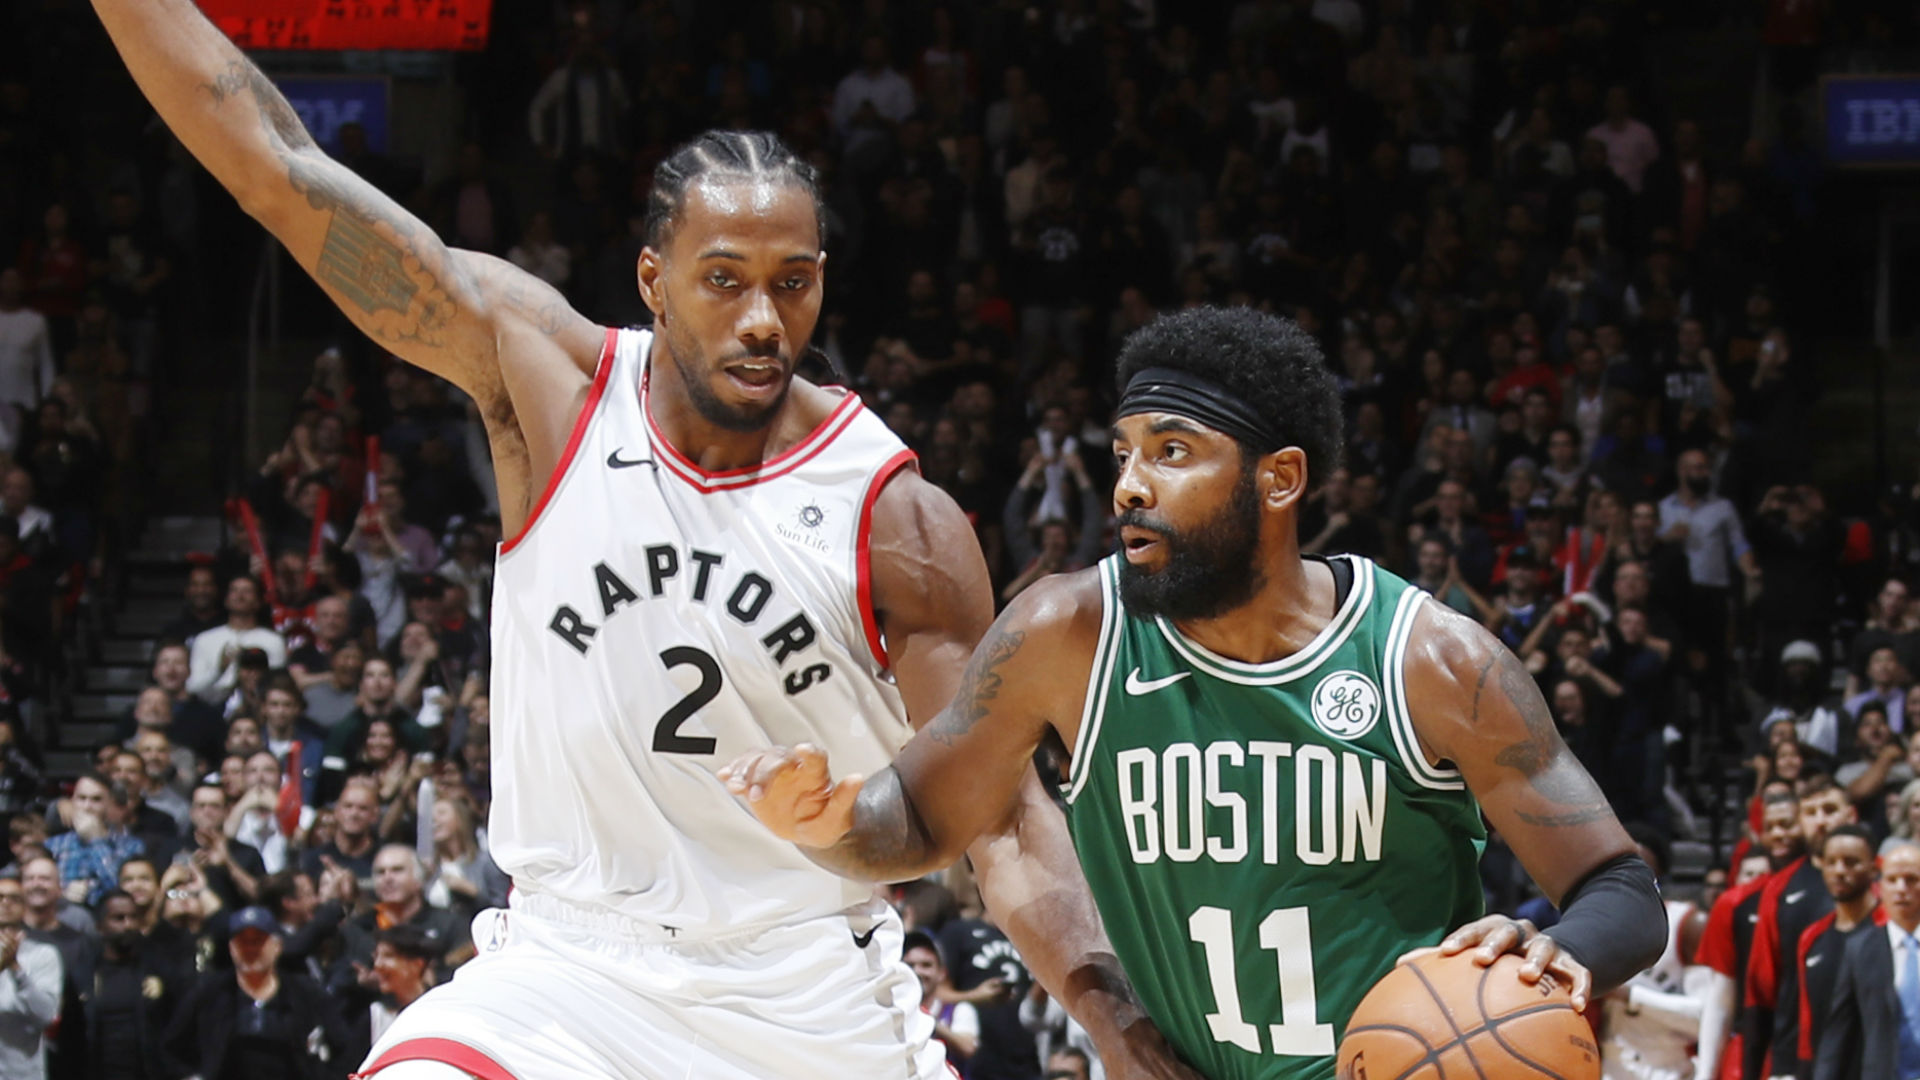 Toronto Raptors vs. Boston Celtics: Live highlights, updates, box score and more | NBA.com